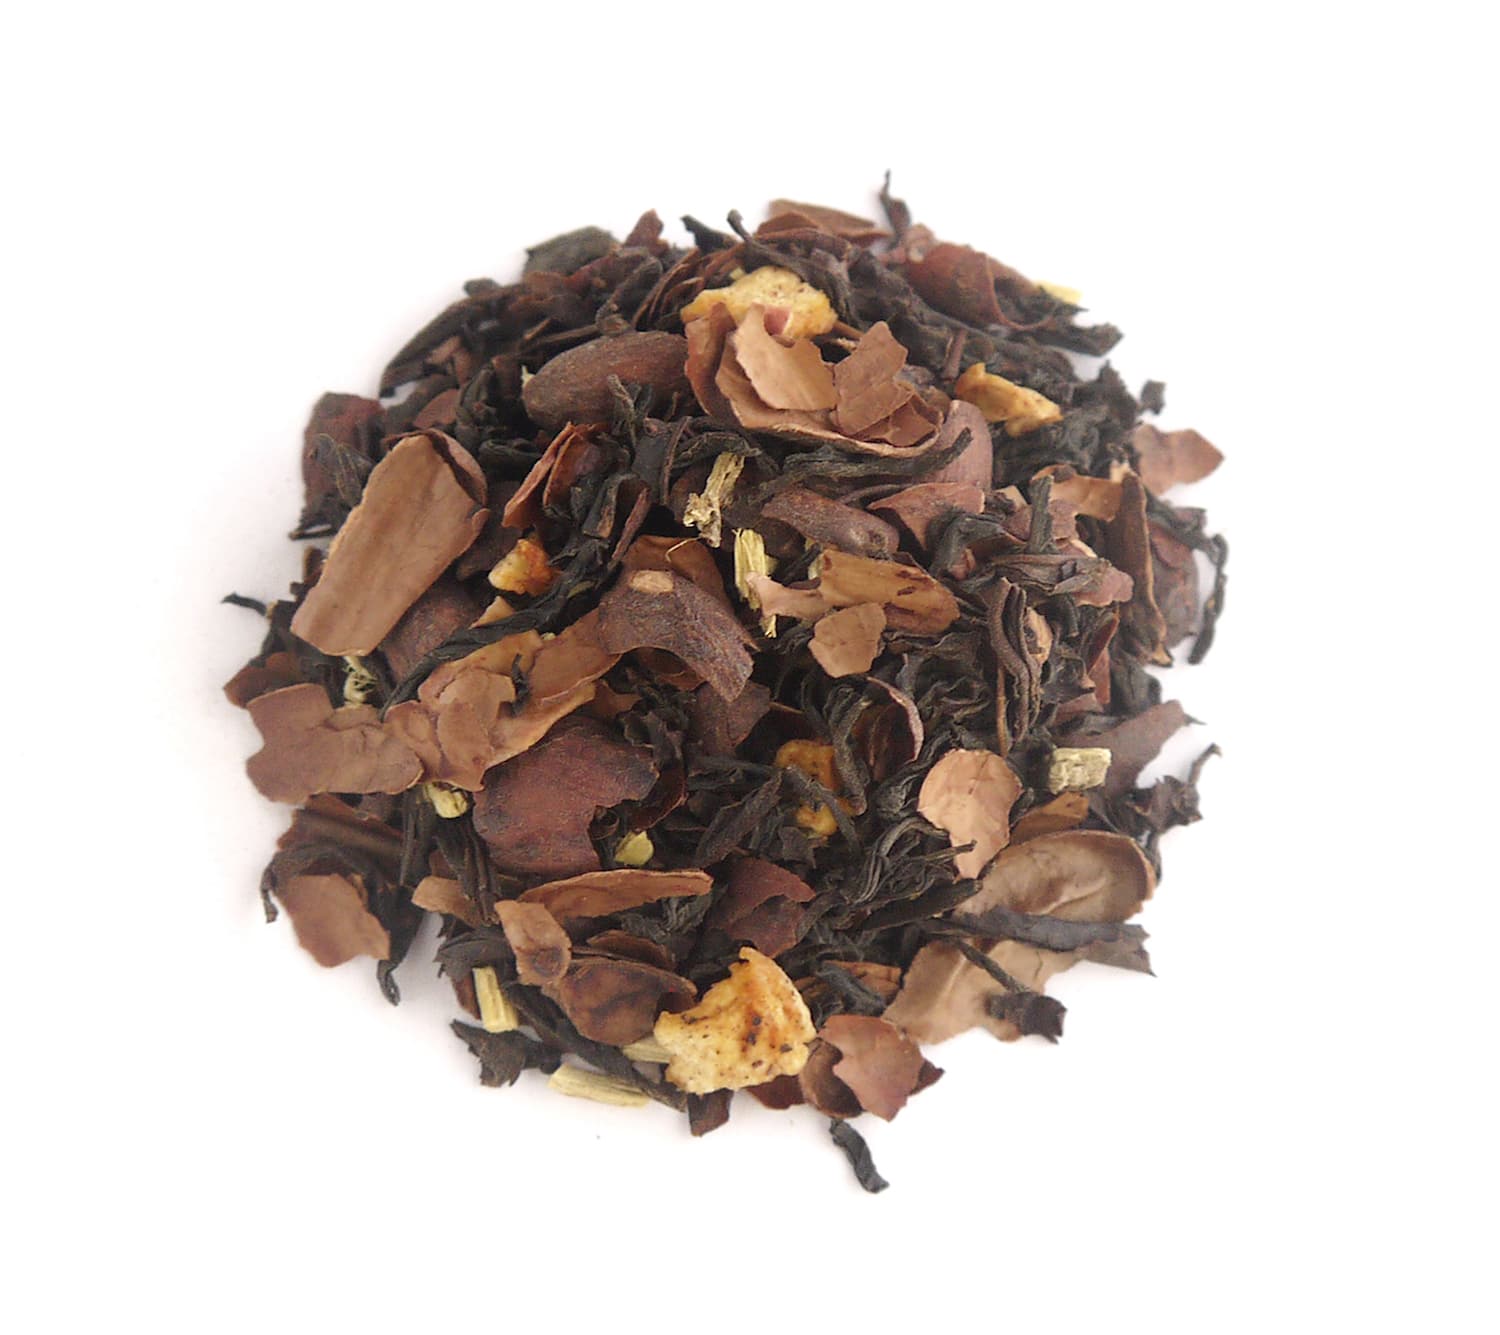 Thés Bio en vrac - Nos recettes de thé en vrac - Tea Heritage